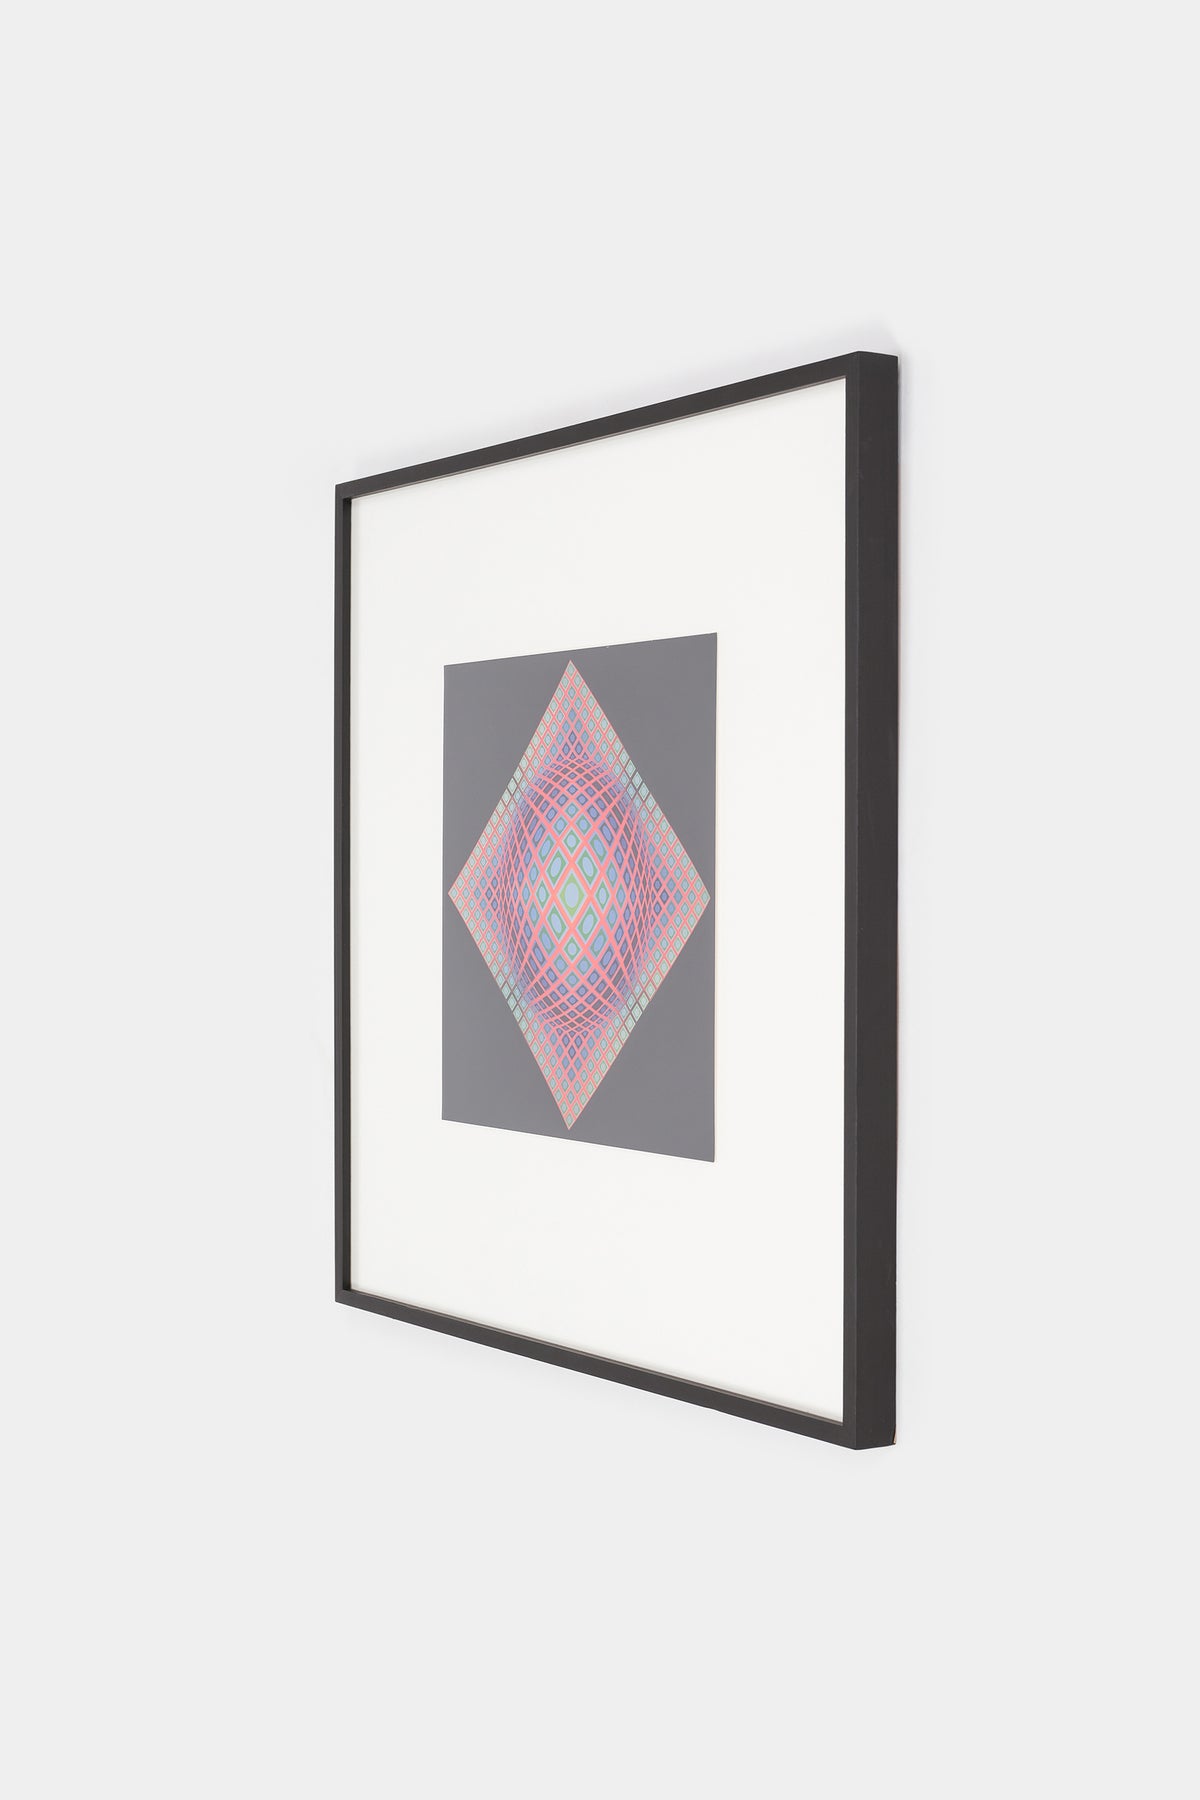 Victor Vasarely, Print Vega-201, Framed, 1971